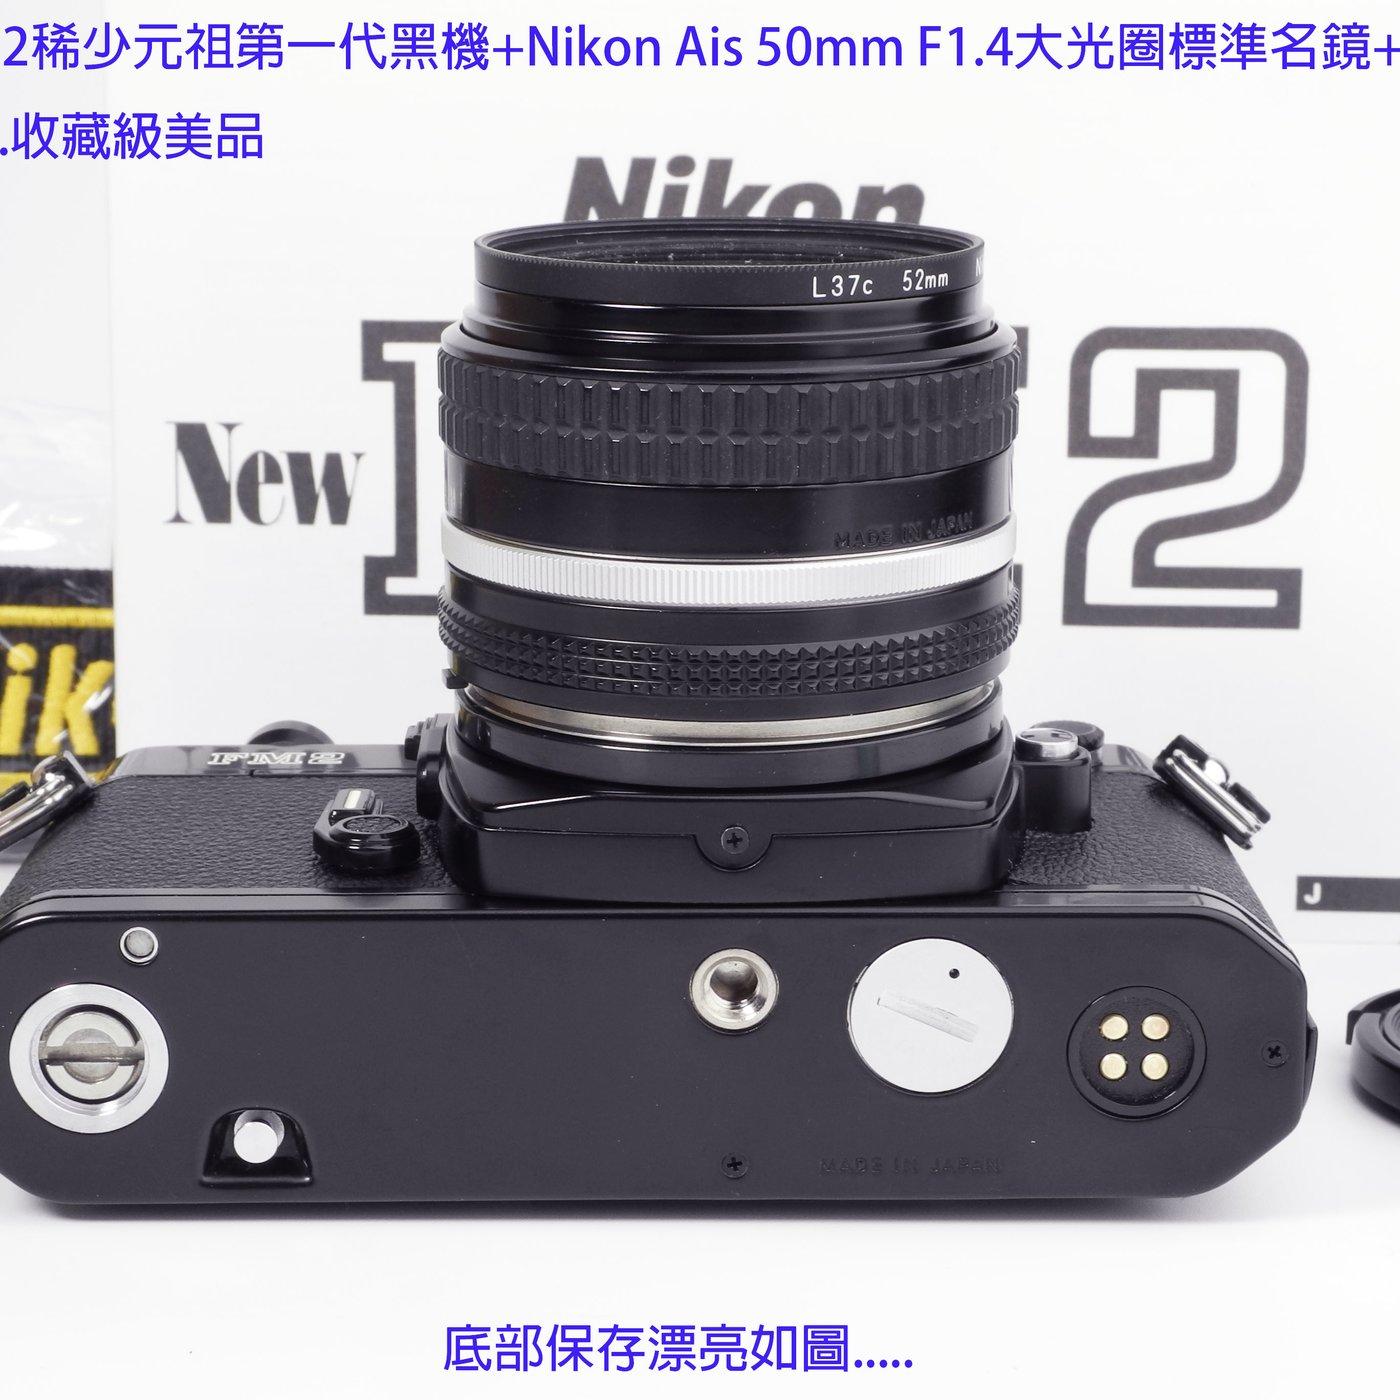 Nikon FM2稀少元祖第一代黑機+Nikon Ais 50mm F1.4大光圈標準名鏡+原廠